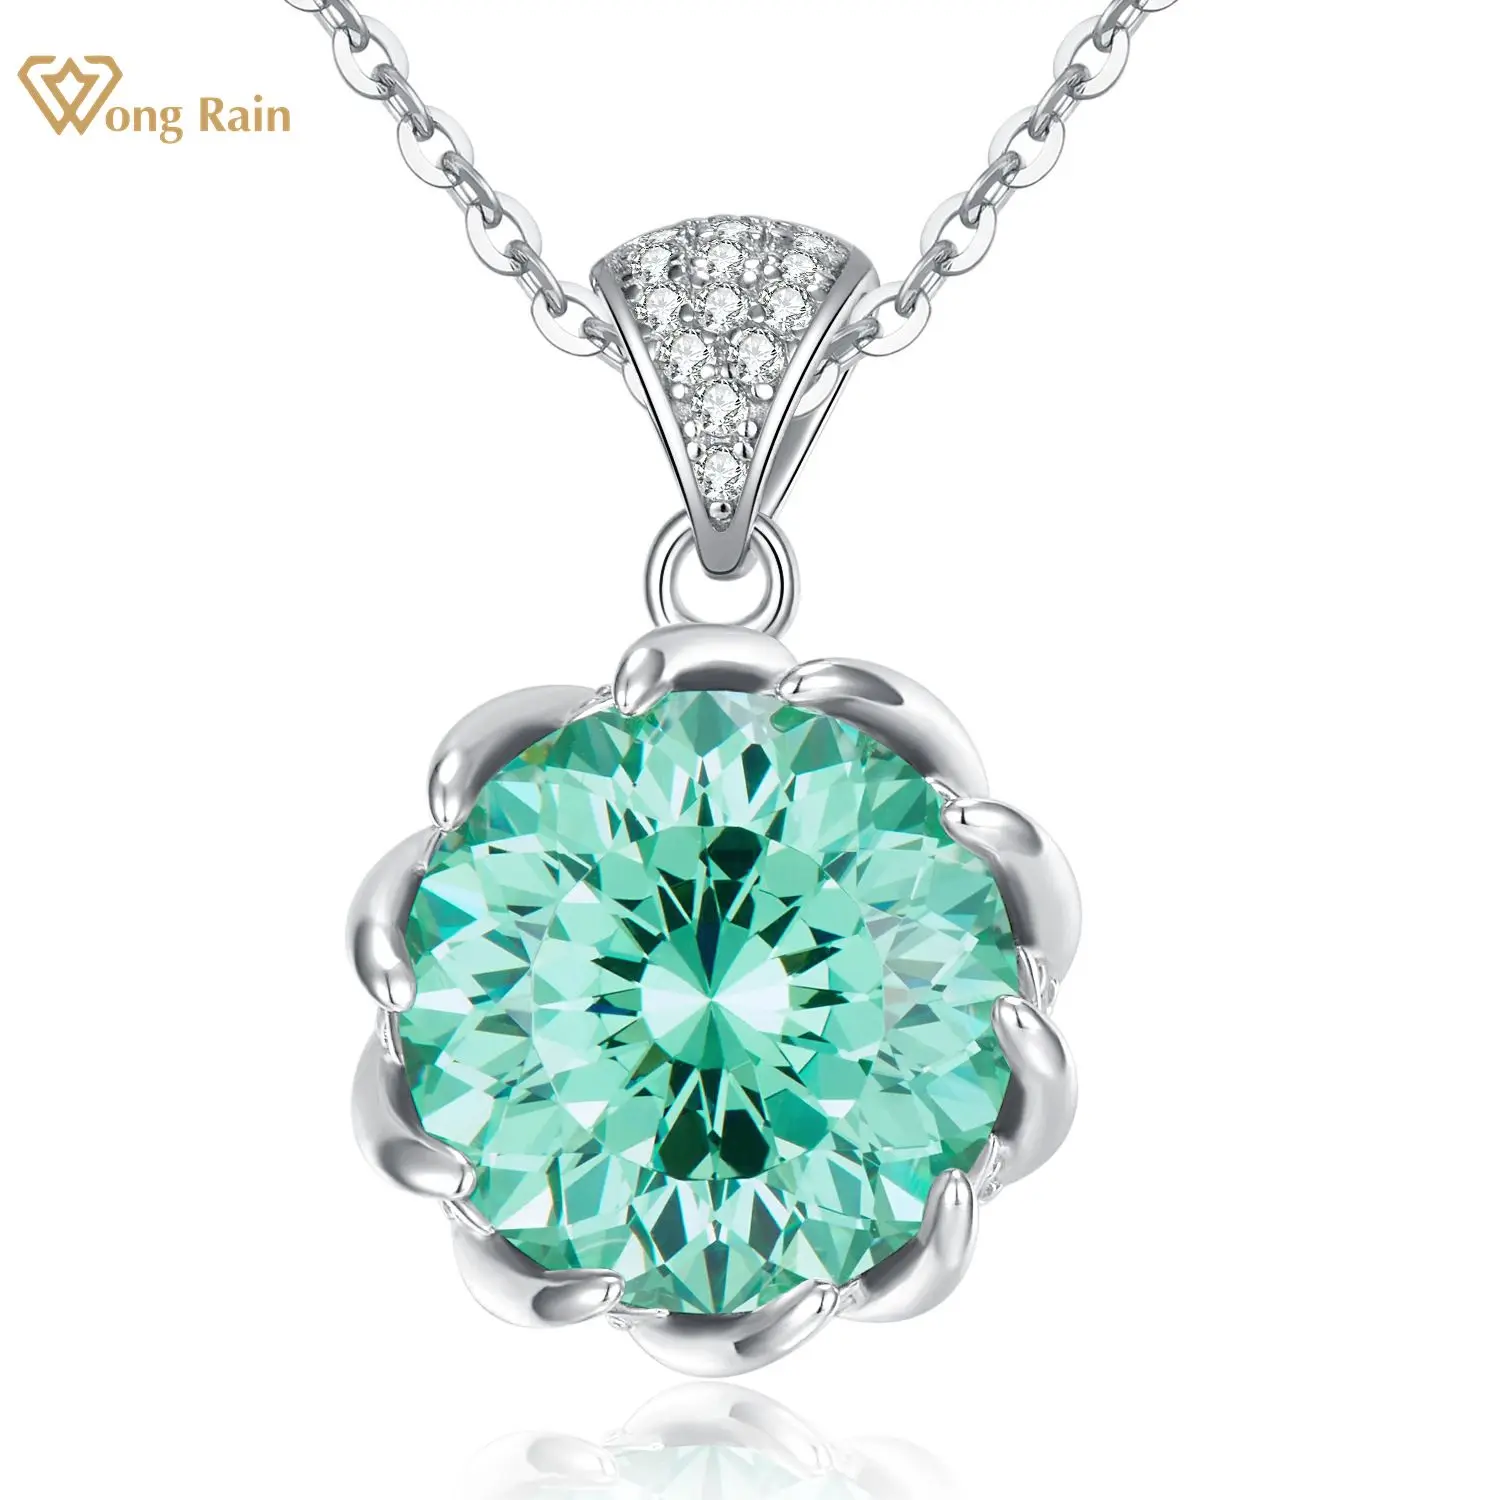 Wong Rain 925 Sterling Silver Flowers Cut Green Paraiba High Carbon Diamonds Gemstone Pendant Necklace Fine Jewelry Wholesale